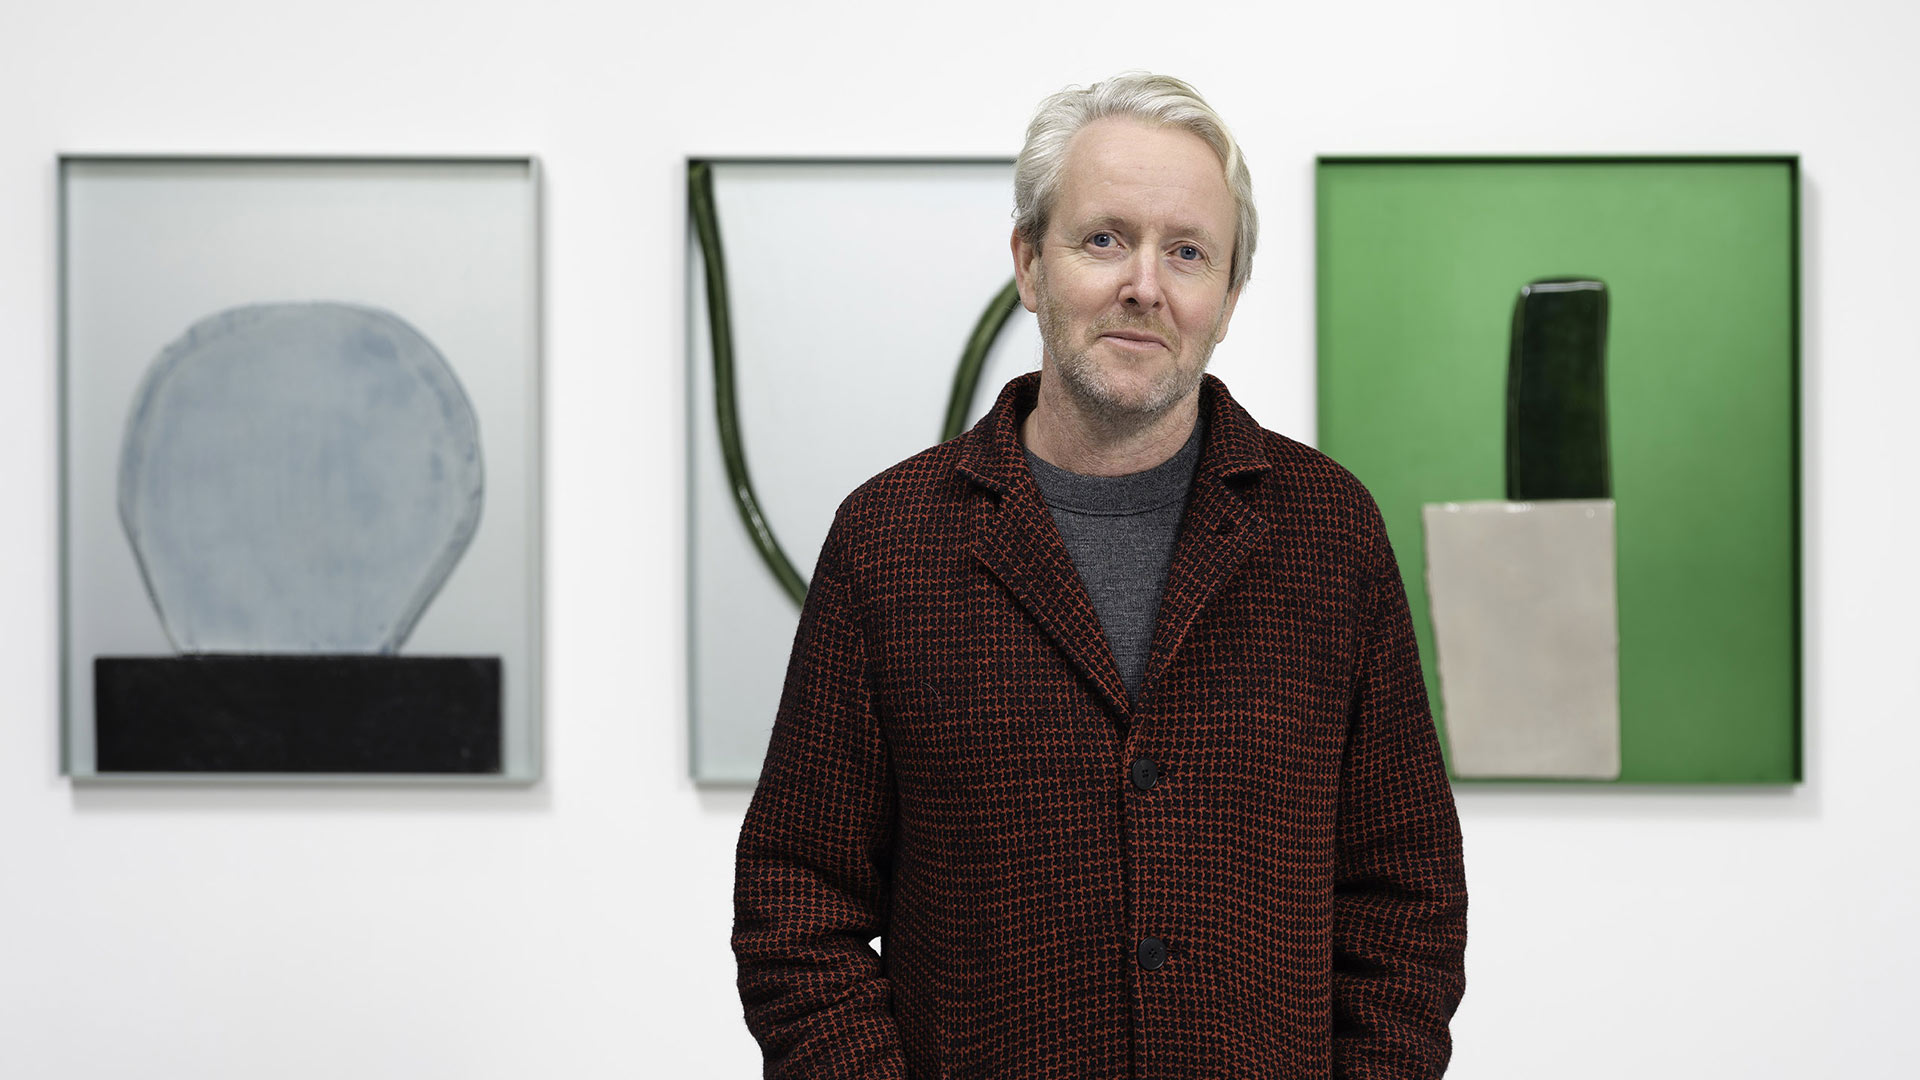 Ronan Bouroullec presents geometric-asymmetric installations at Galerie kreo